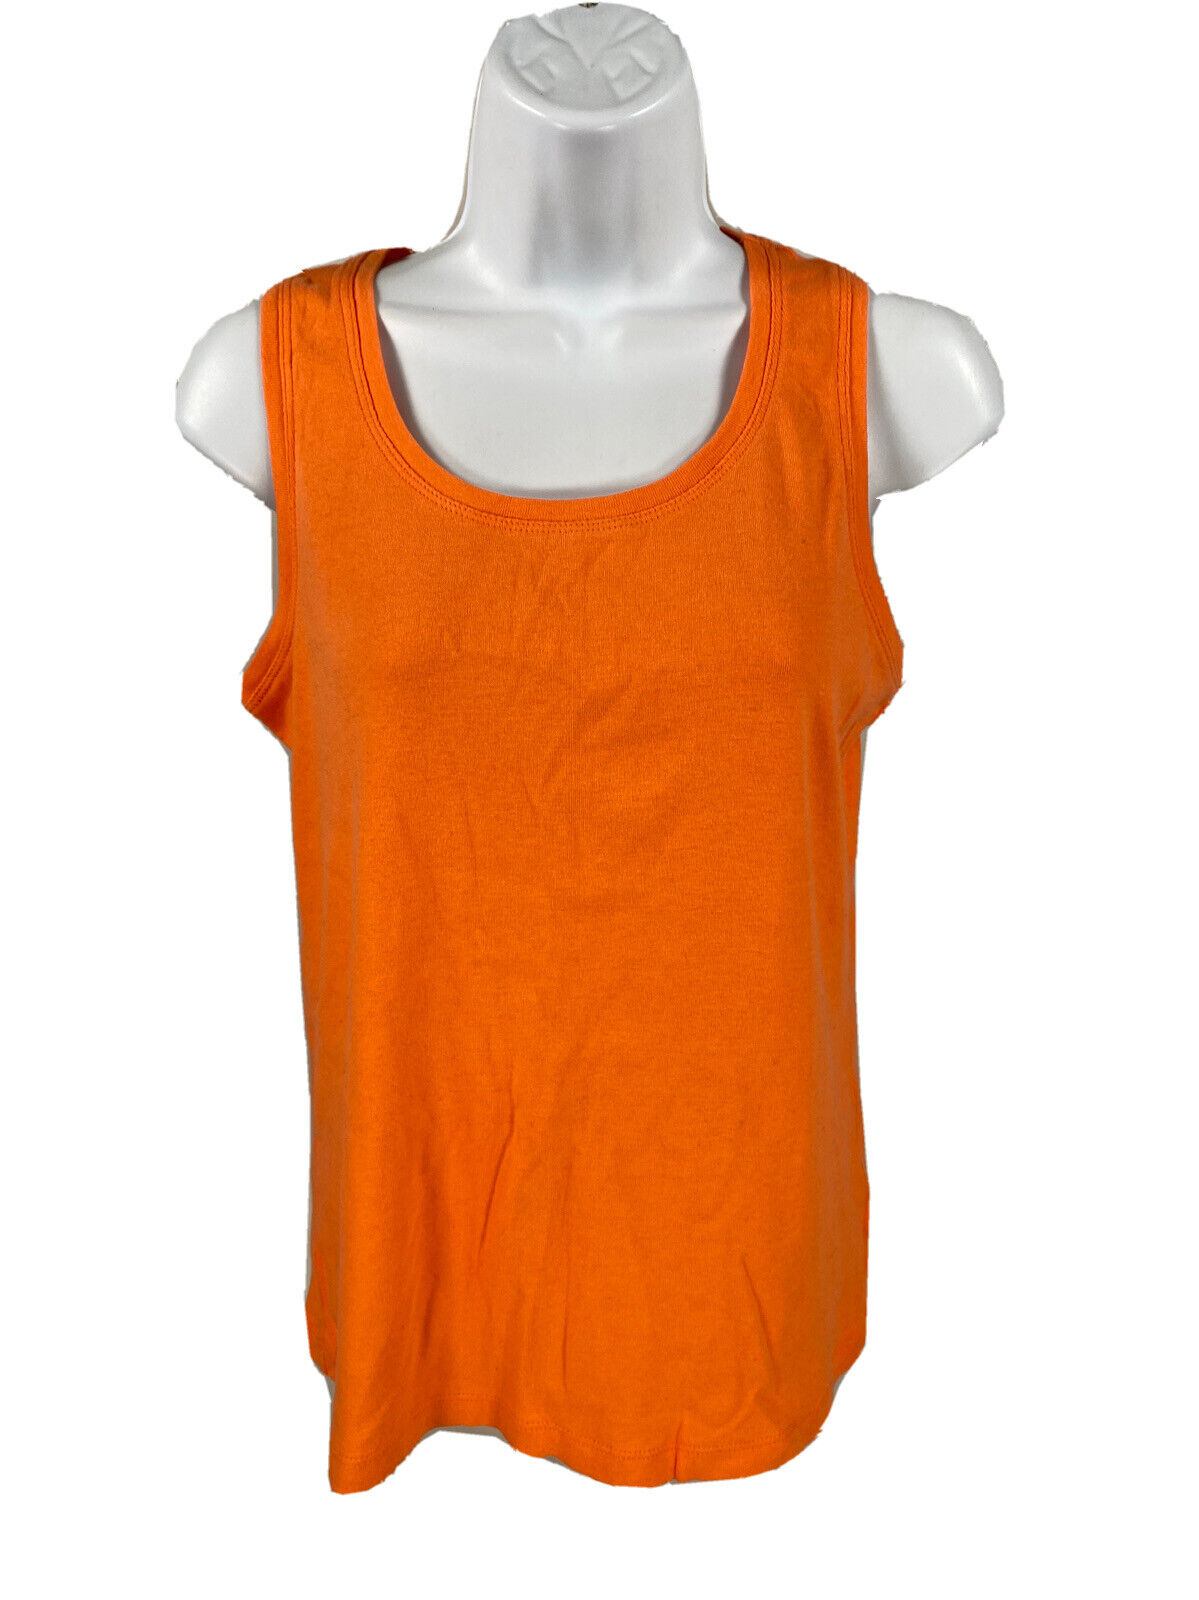 By Chico's Women's Orange Casual Sleeveless Cotton Tank Top Sz 1/ US M